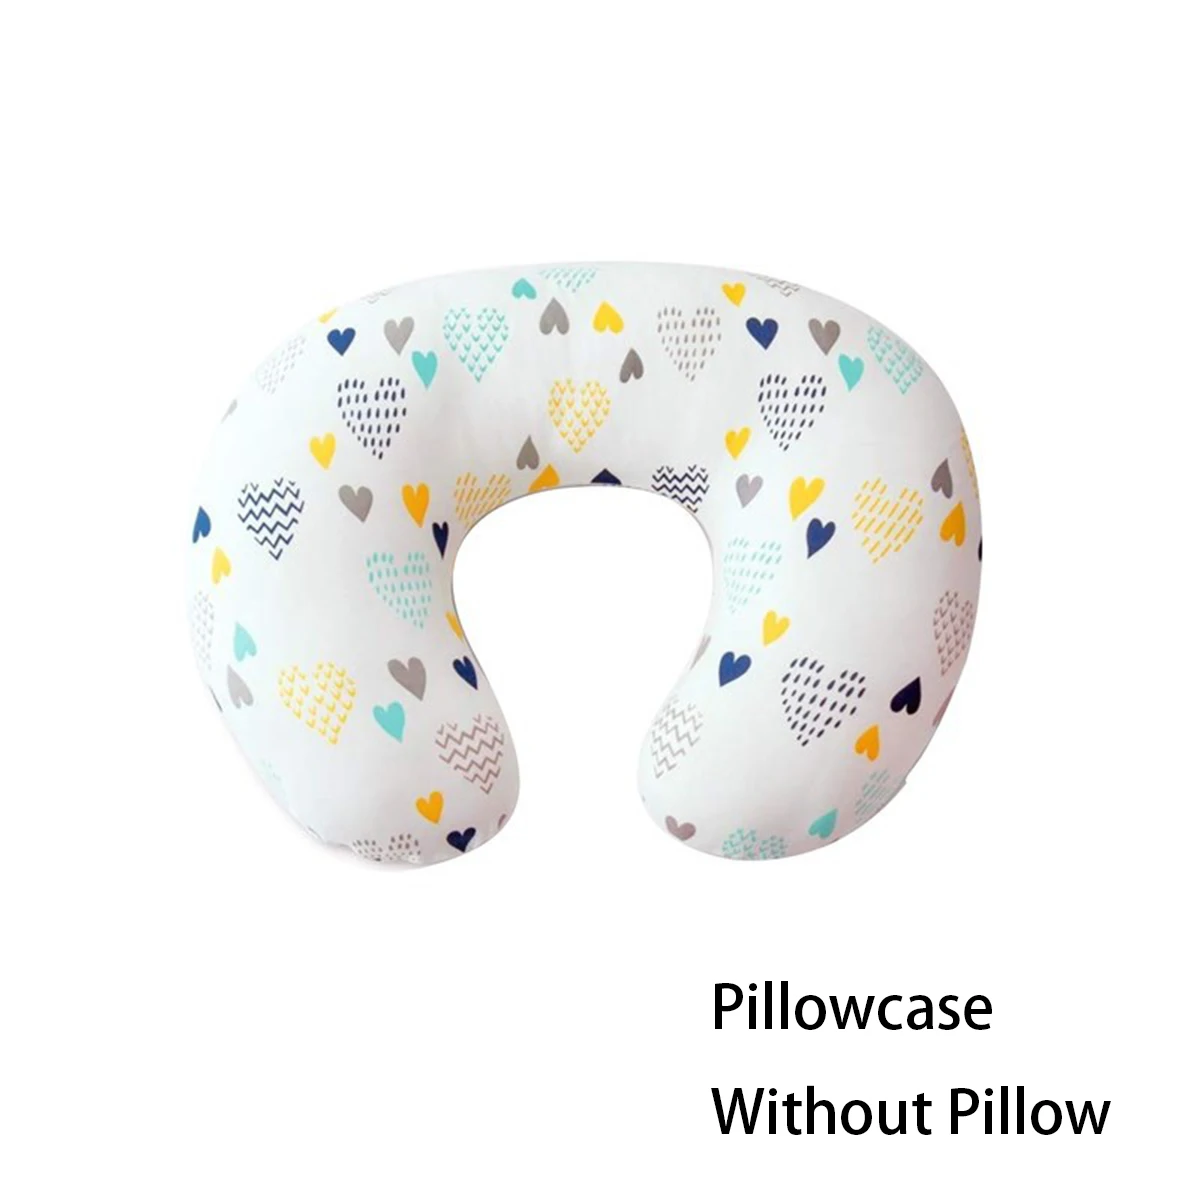 hibobi Removable Animal Printed Pillowcase (Without pillow) Four Seasons Polyester Cotton Pillowcase Babies Nursing Pillow Cover